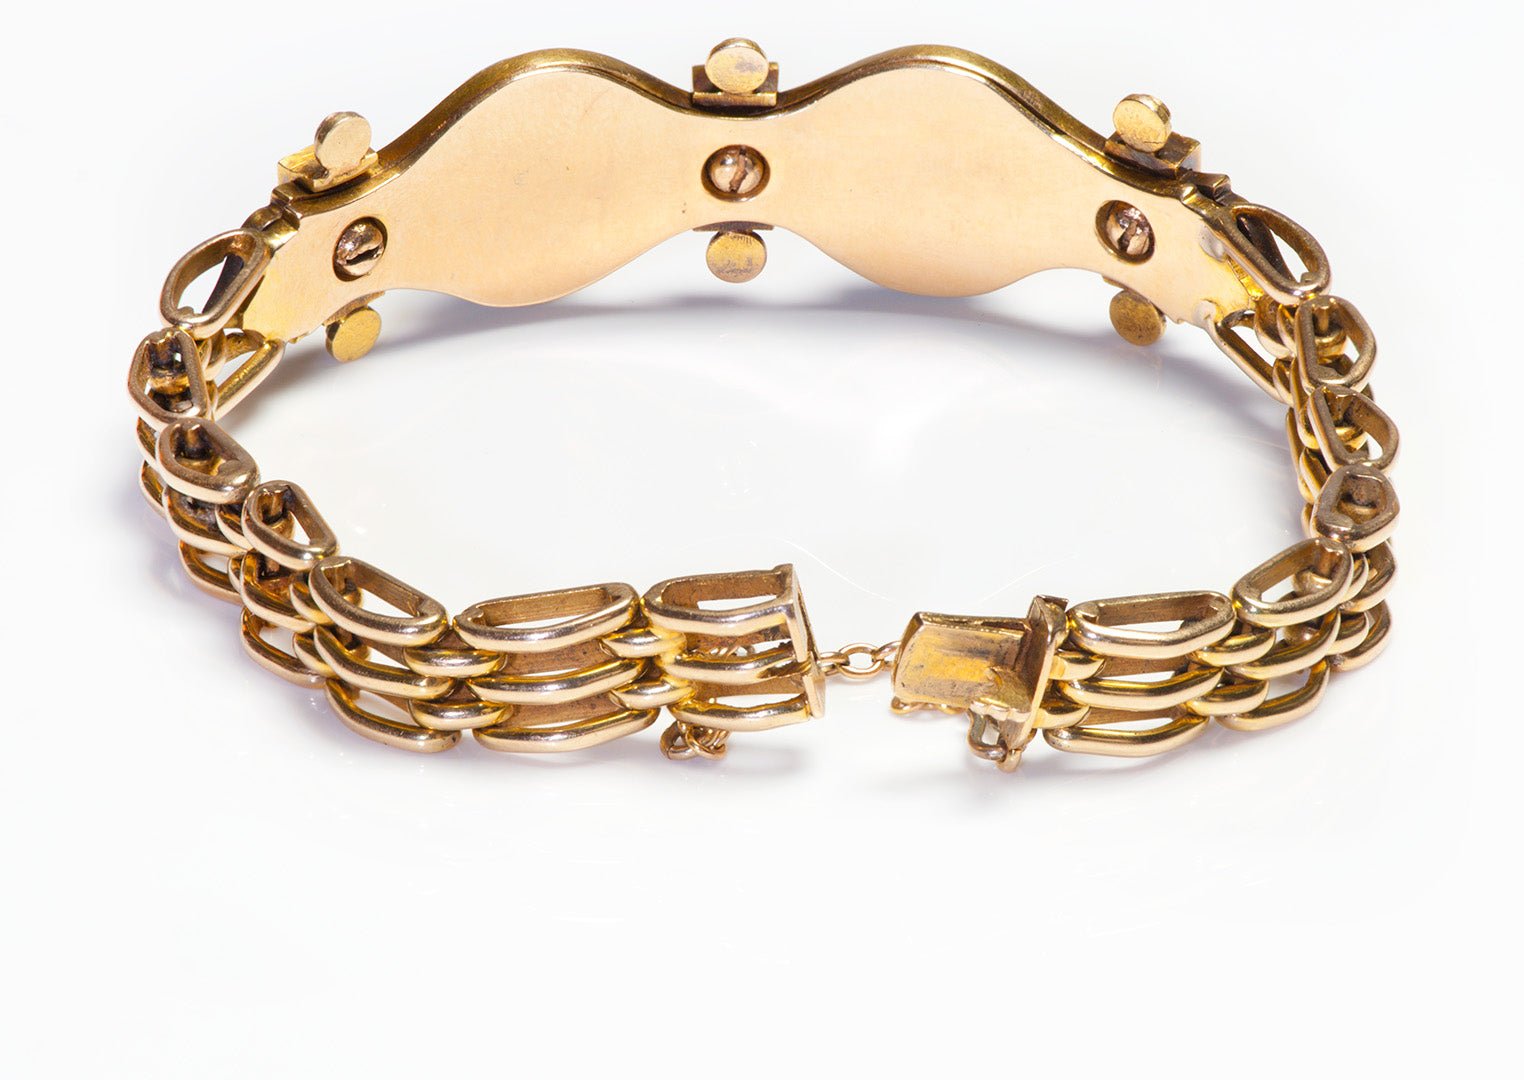 Antique Gold Pearl Rose Cut Diamond Bracelet - DSF Antique Jewelry